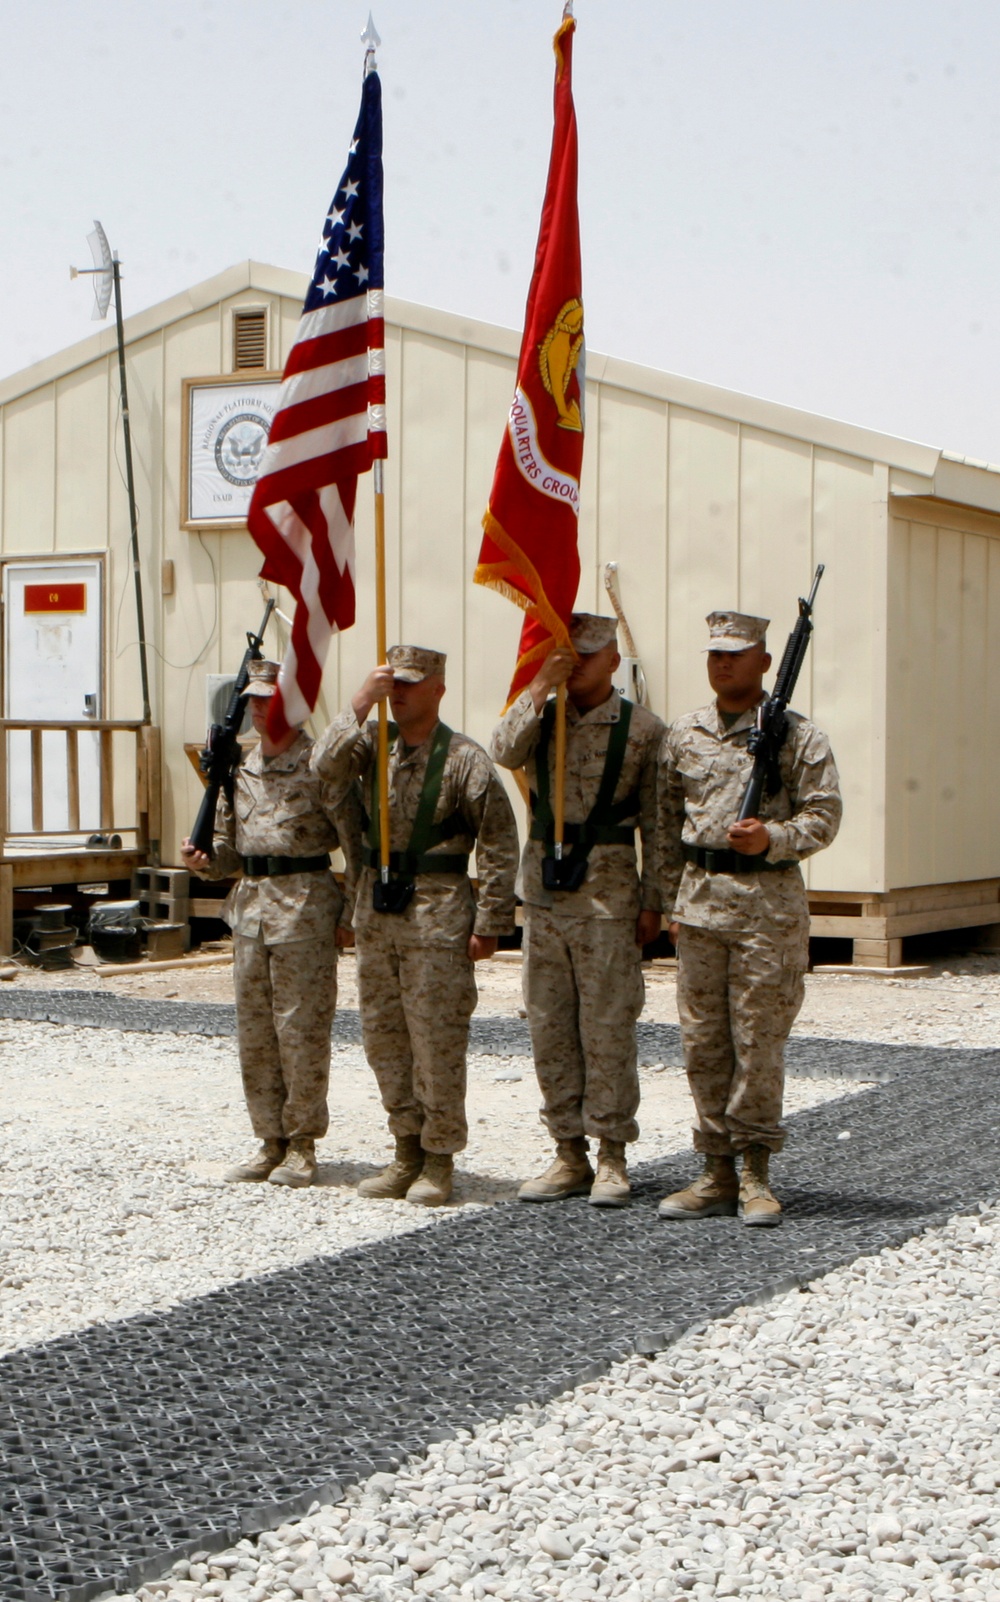 Brigade Headquarters Group - Afghanistan cases unit colors aboard Camp Leatherneck